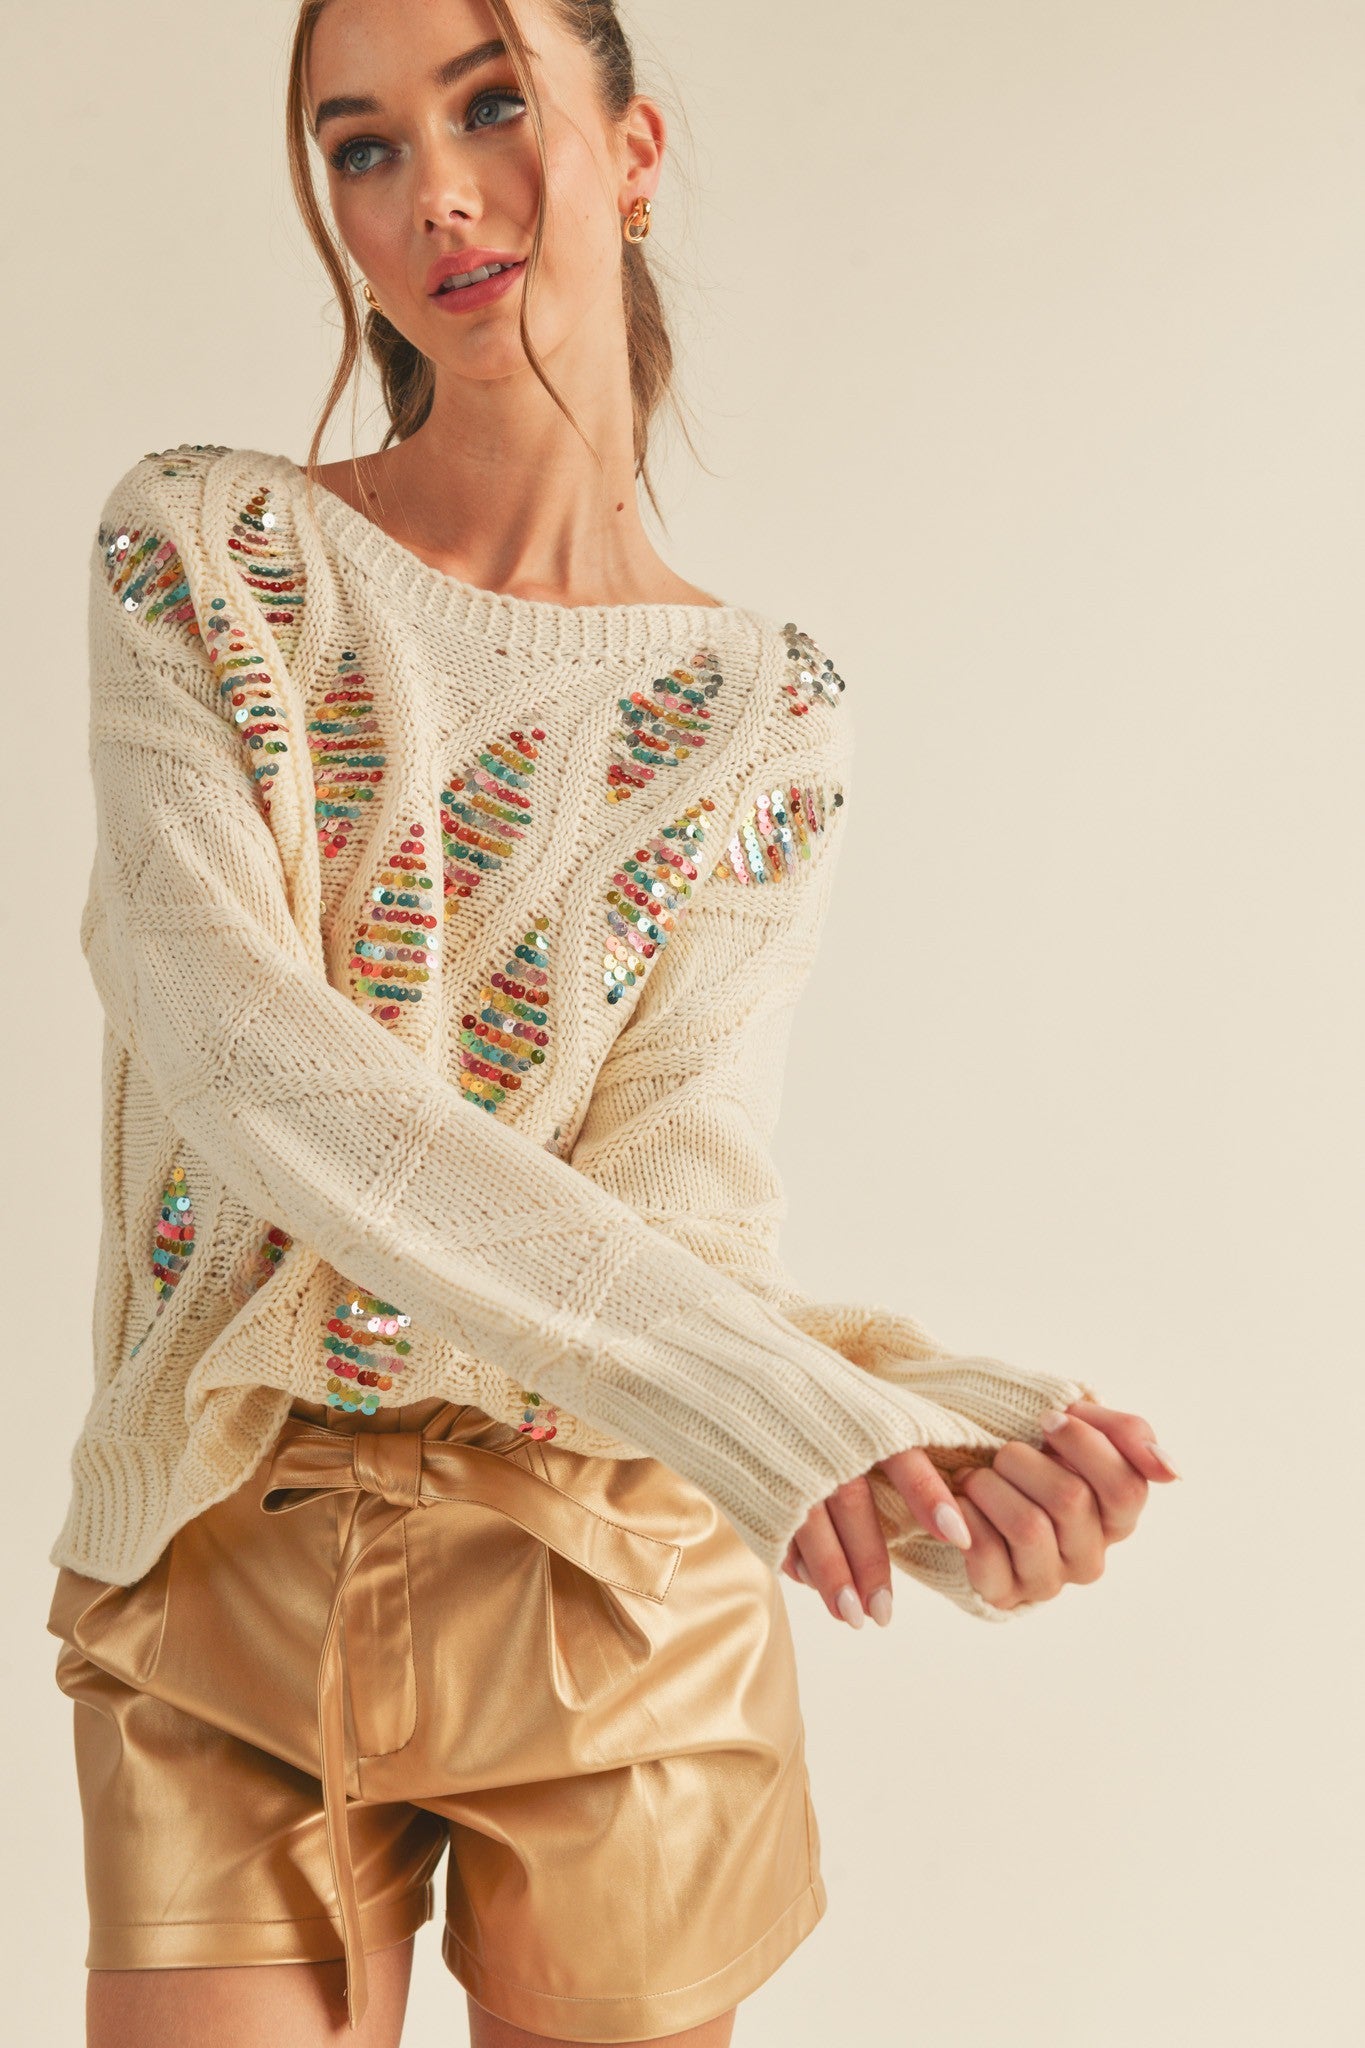 The Kristi Embellished Sweater